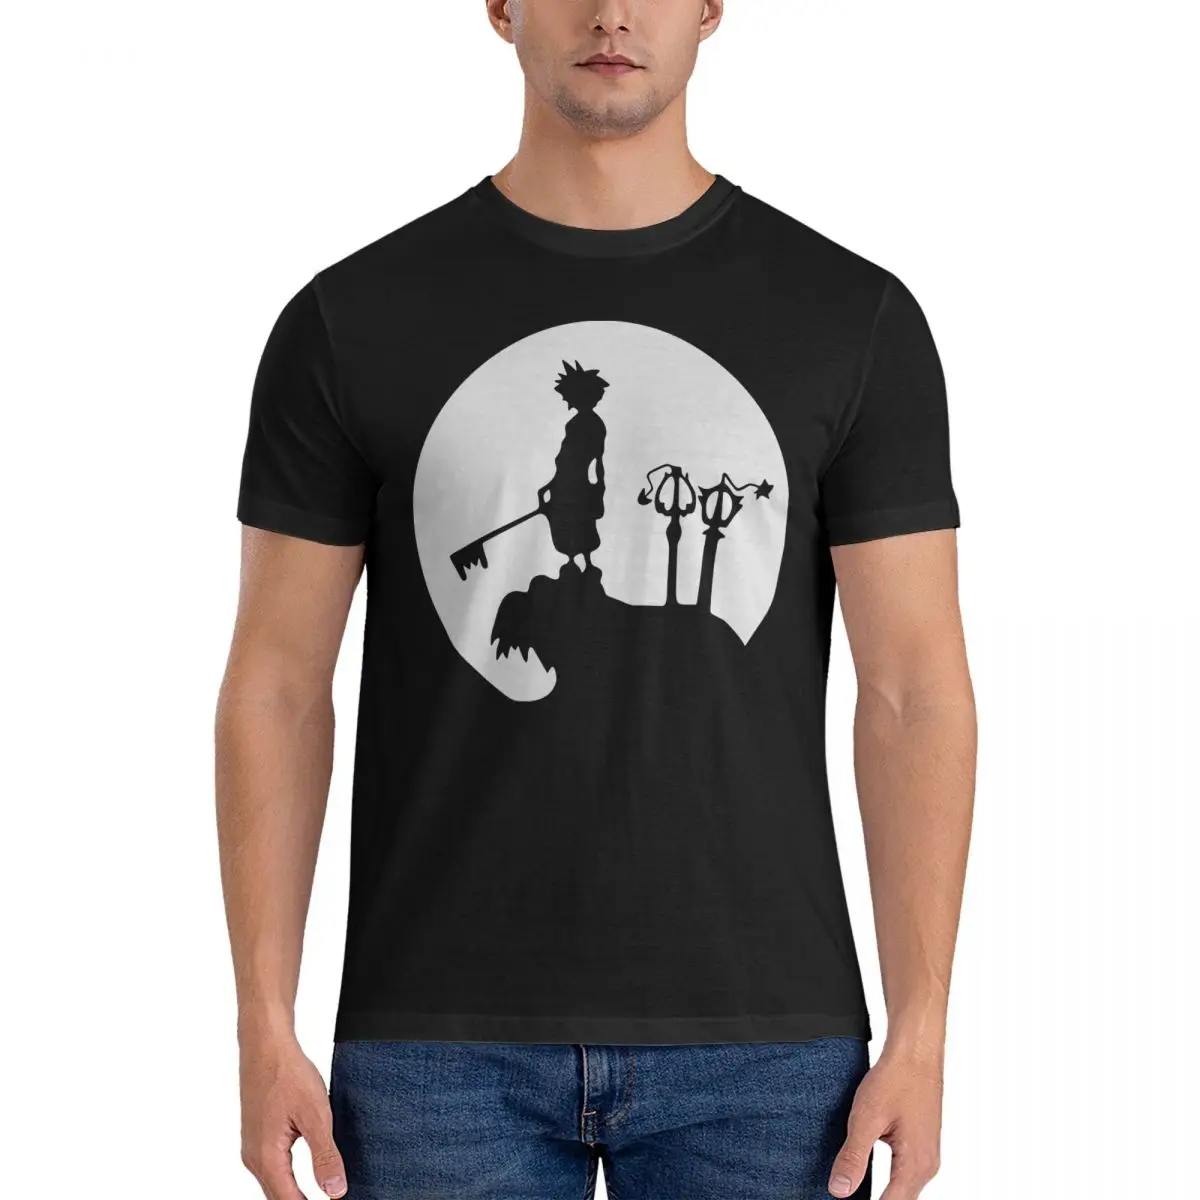 

Novelty Sora Final Fantasy T-Shirt for Men Crew Neck 100% Cotton T Shirt Hearts Short Sleeve Tee Shirt Graphic Tops